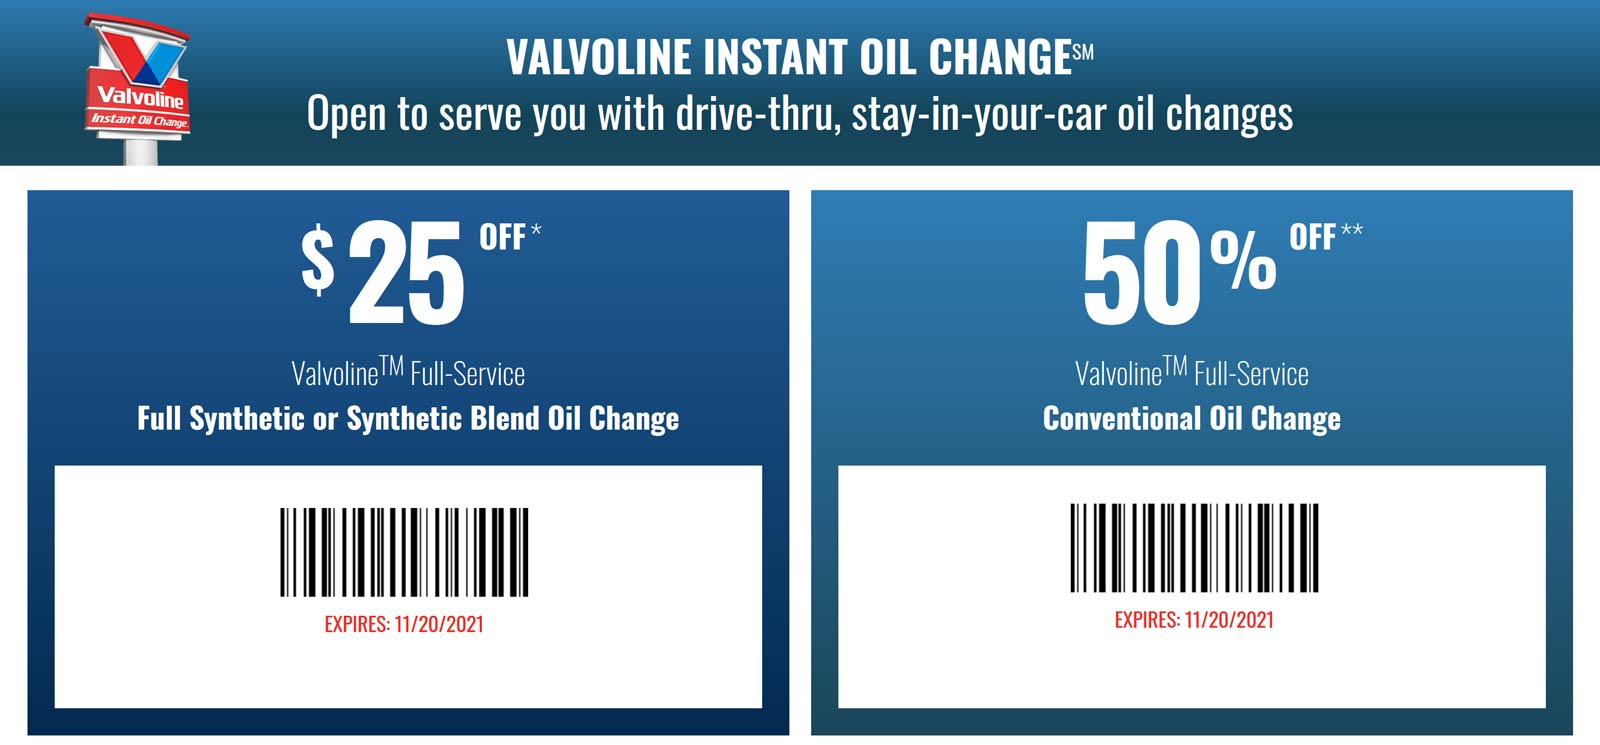 Valvoline Instant Oil Change Coupons, Promo Codes & Deals 2021 - wide 6